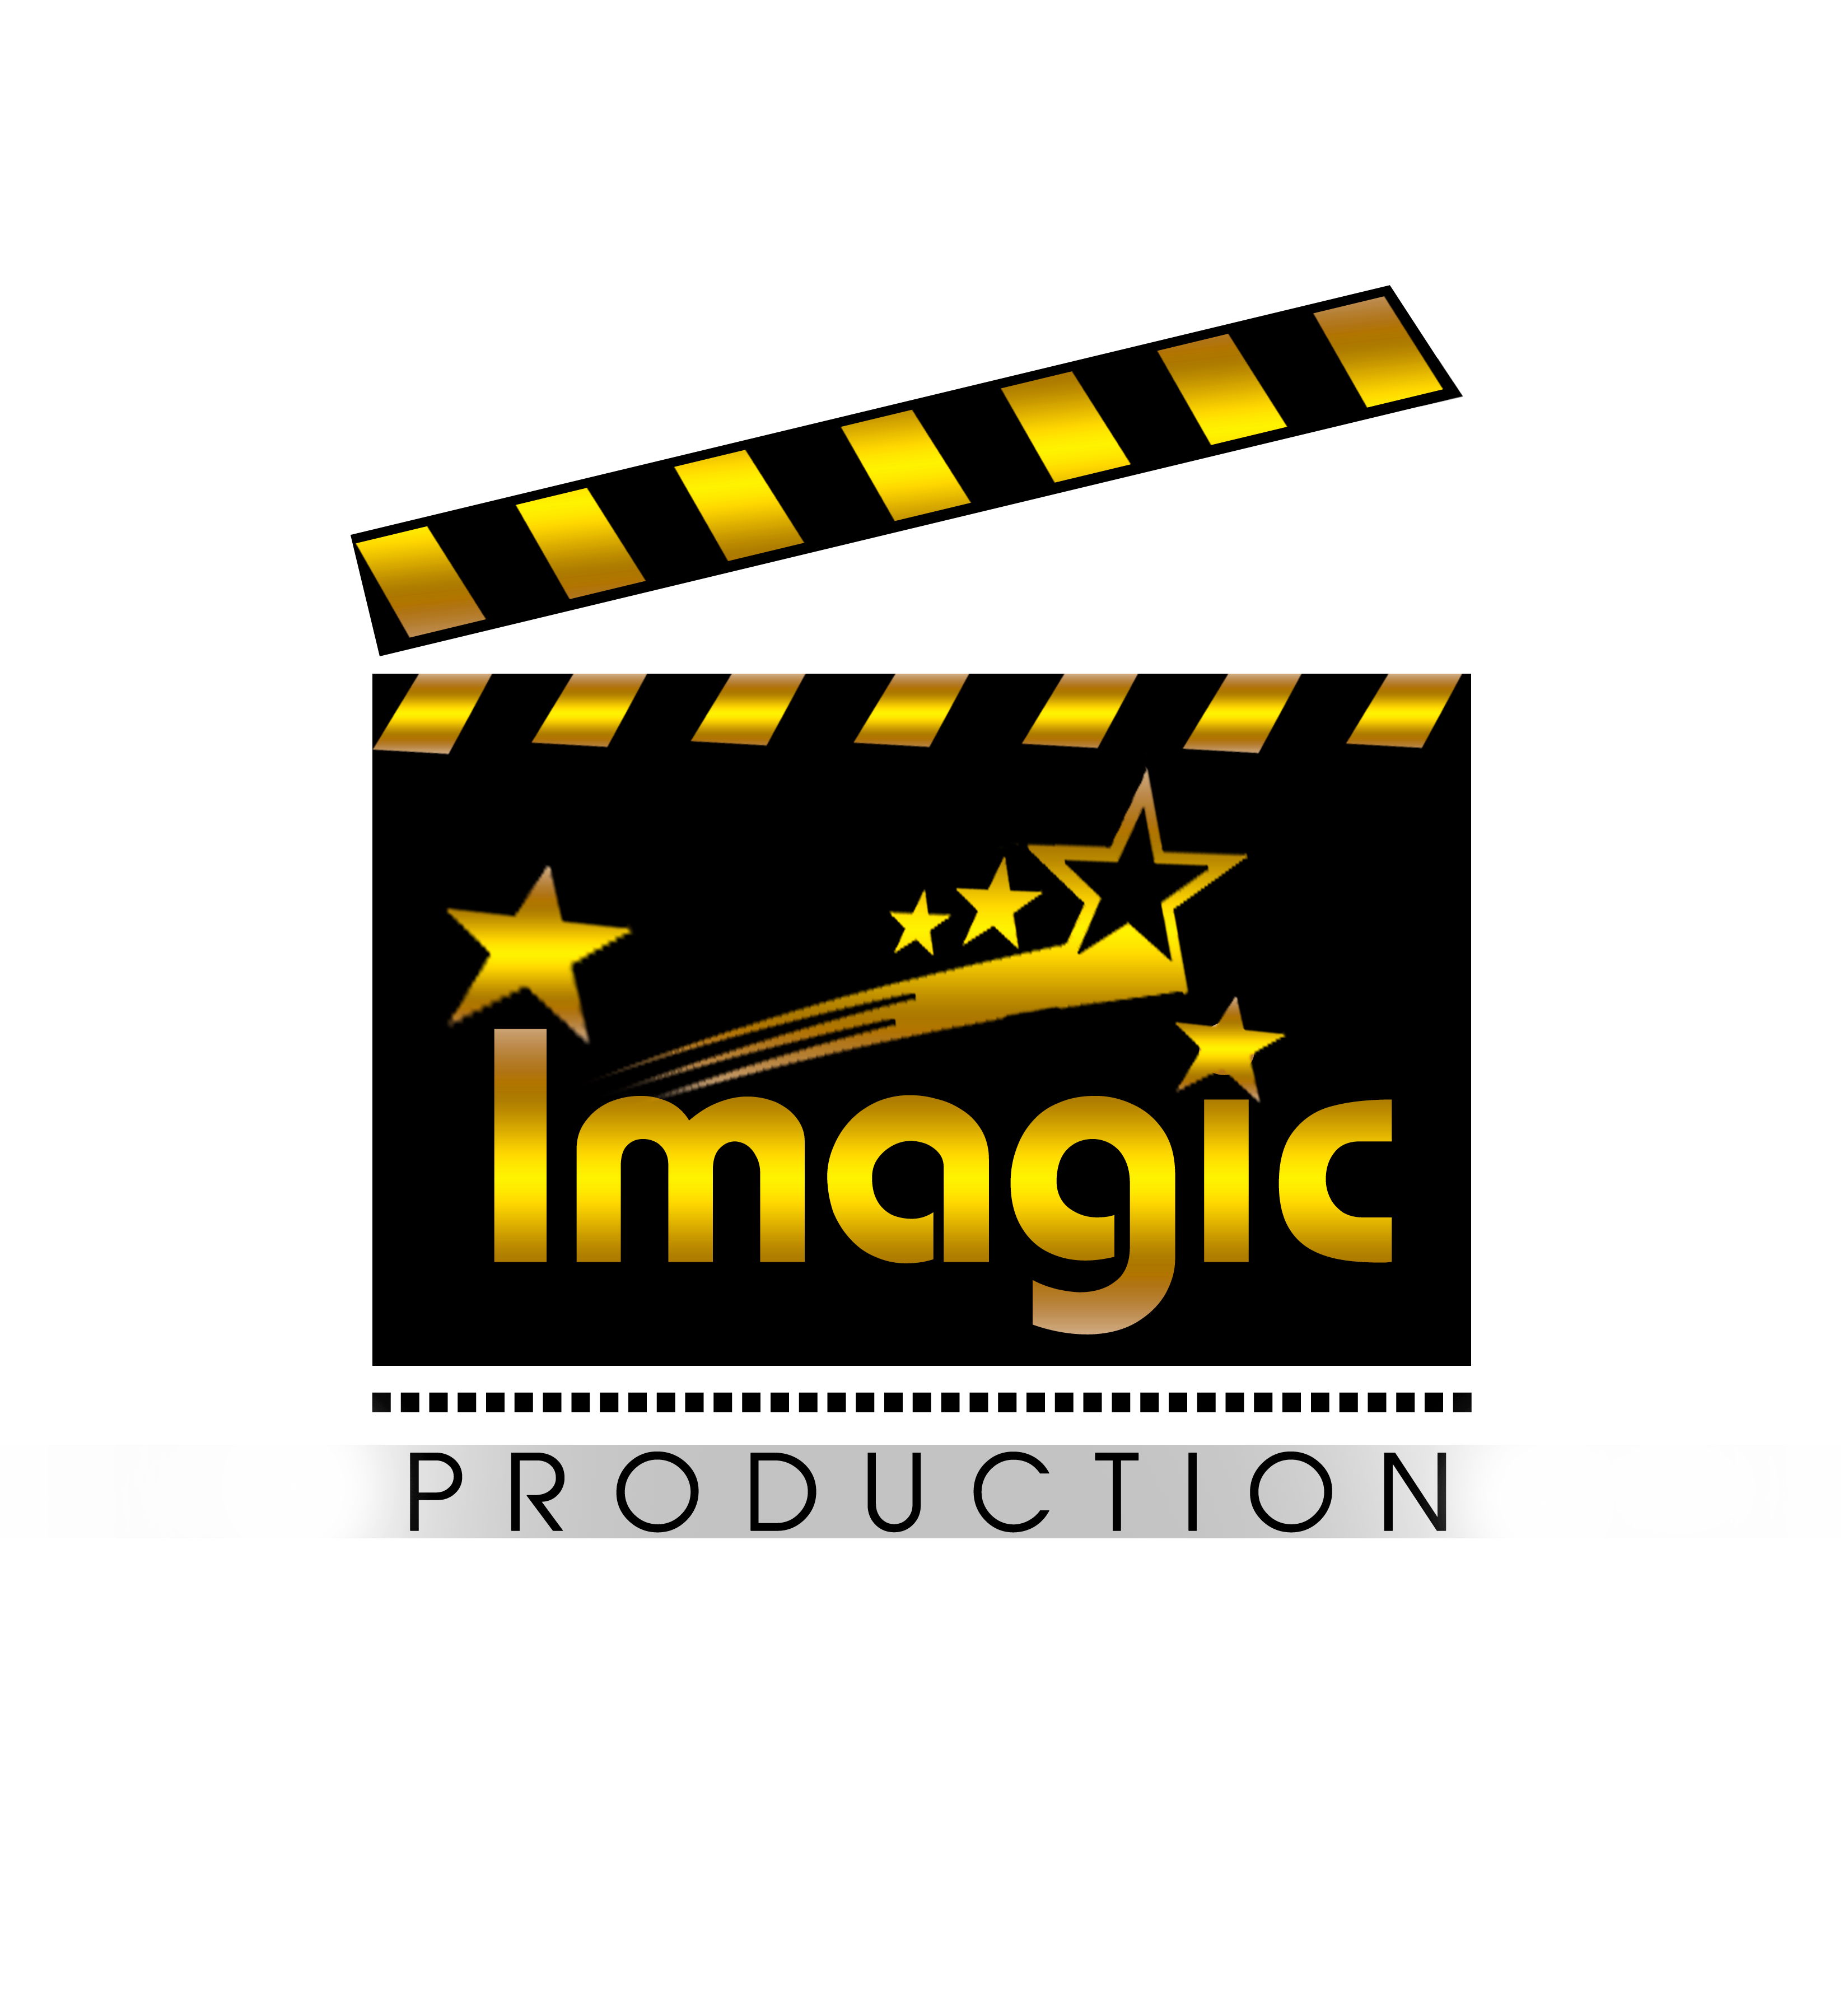 Imagic Production